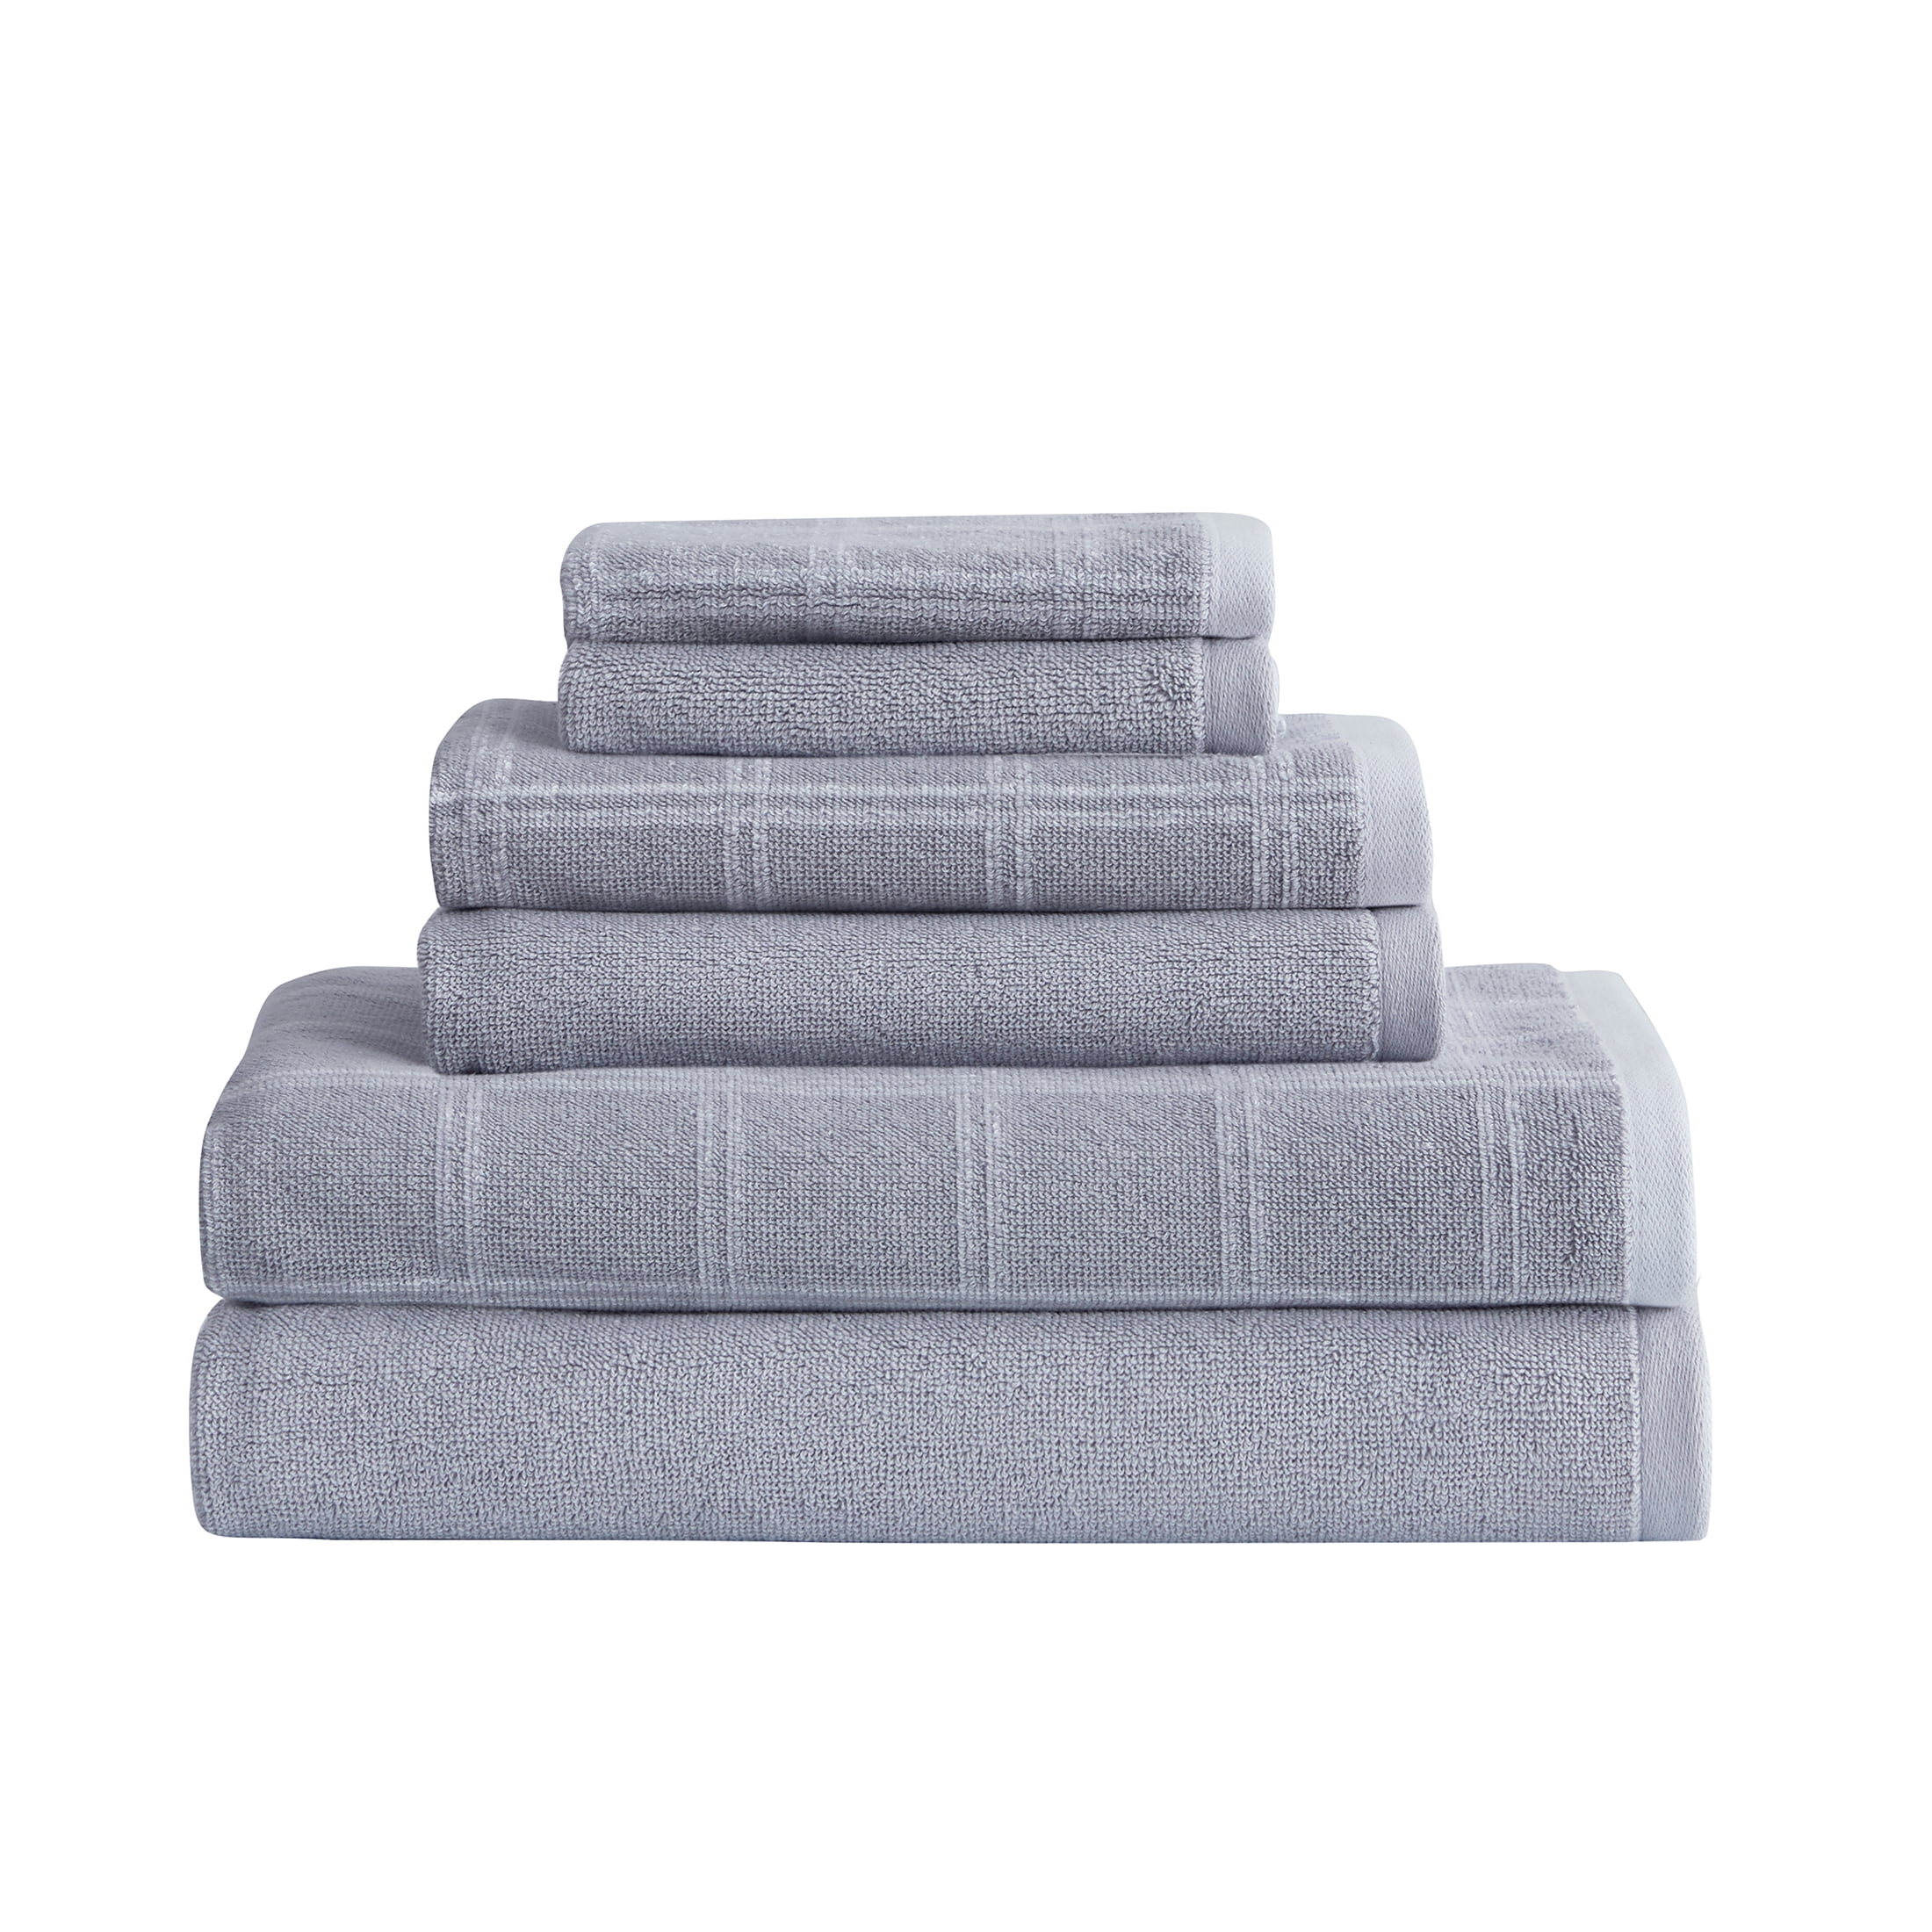 6 Pieces HygroCotton Bath Towel Set in Stone Gray Towels